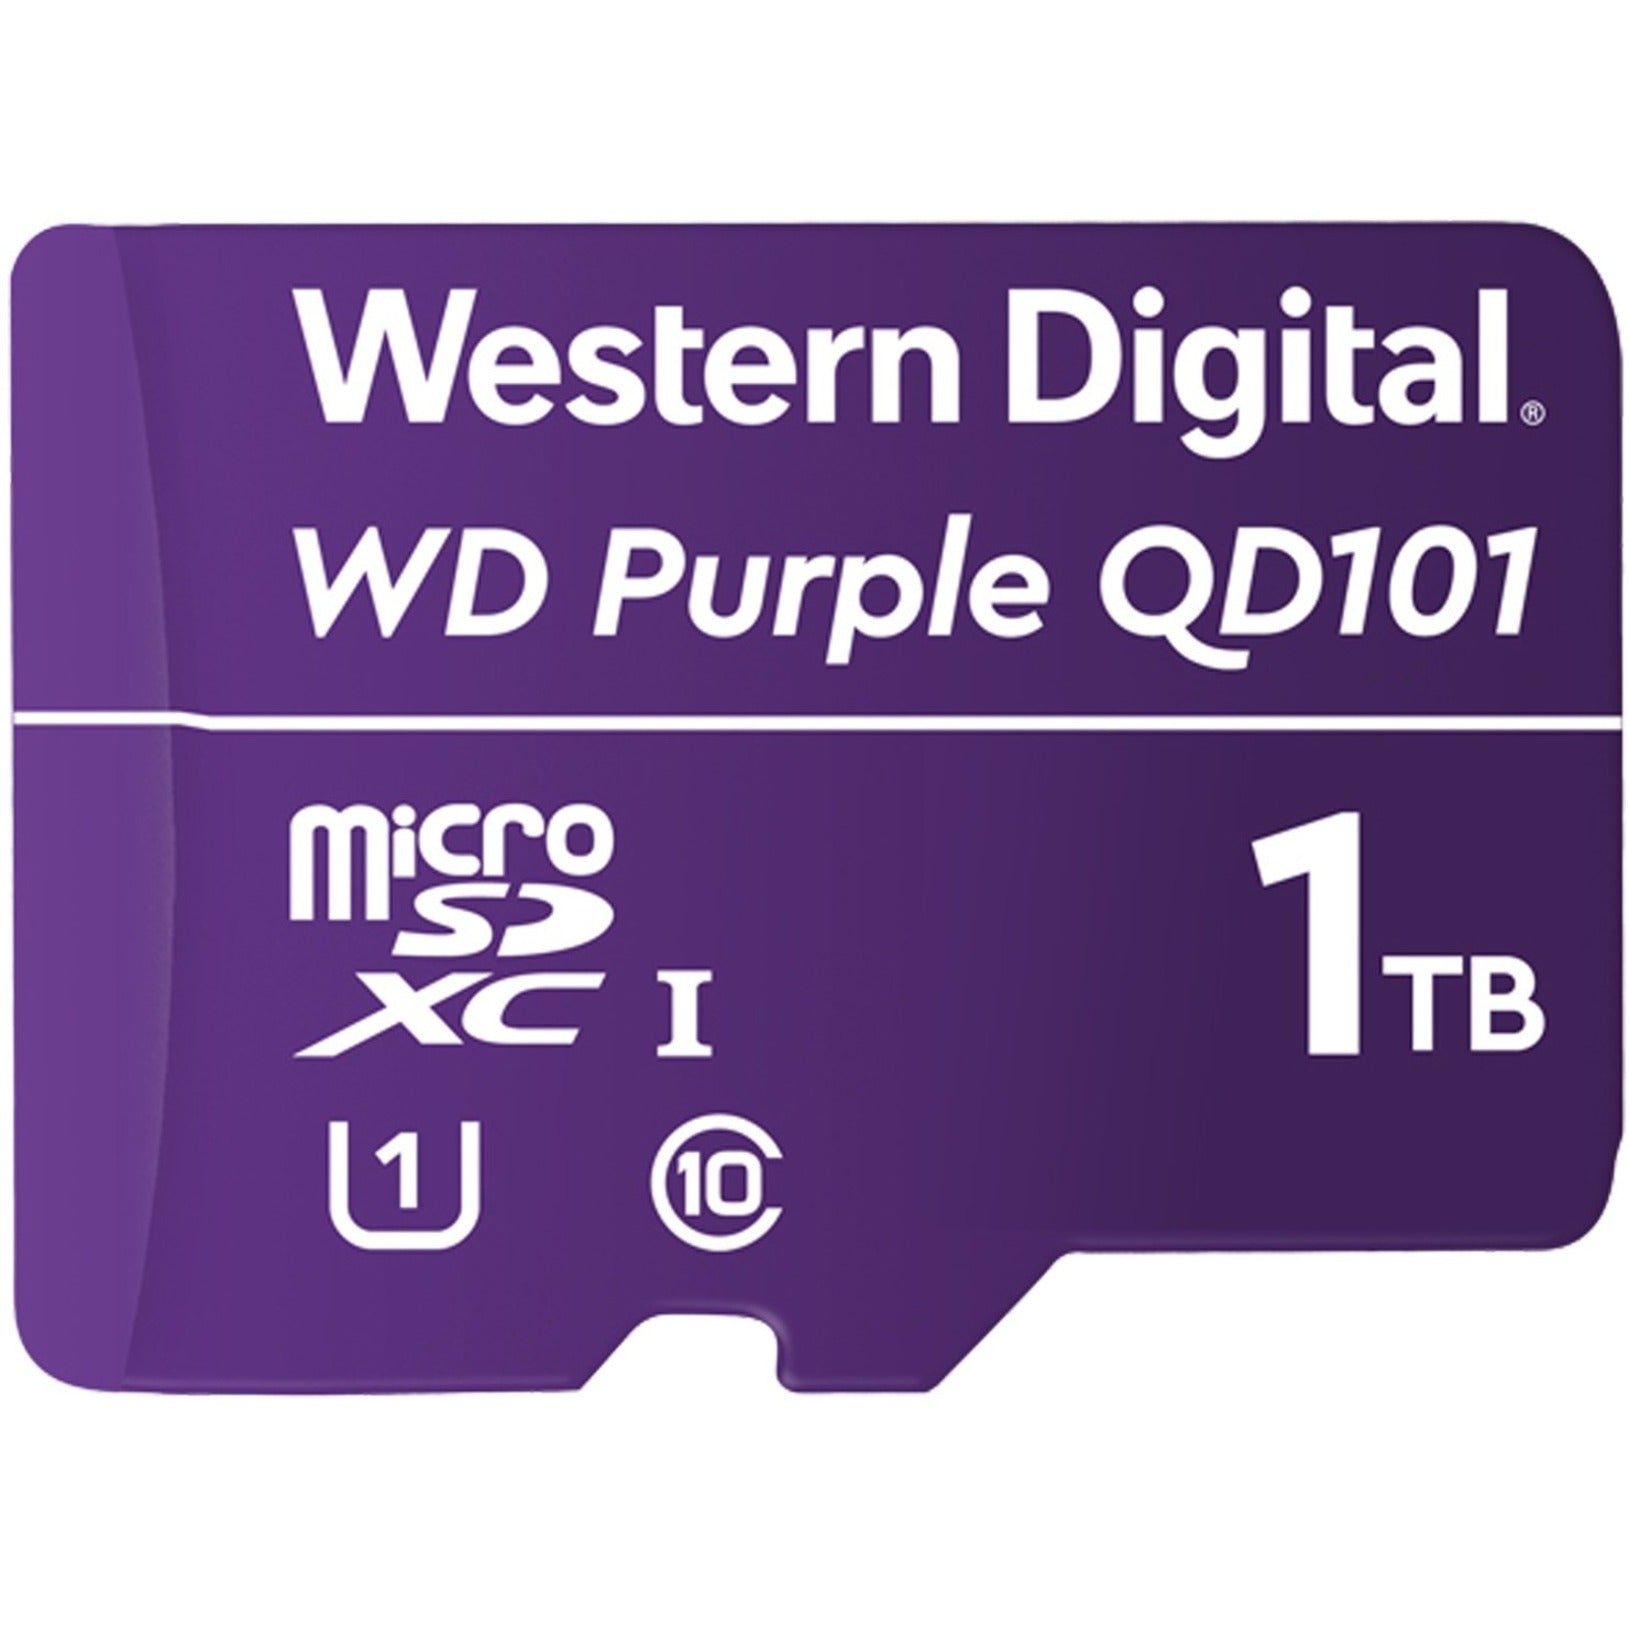 Western Digital WDD100T1P0C Purple™ SC QD101 1TB microSDXC, 3 Year Warranty